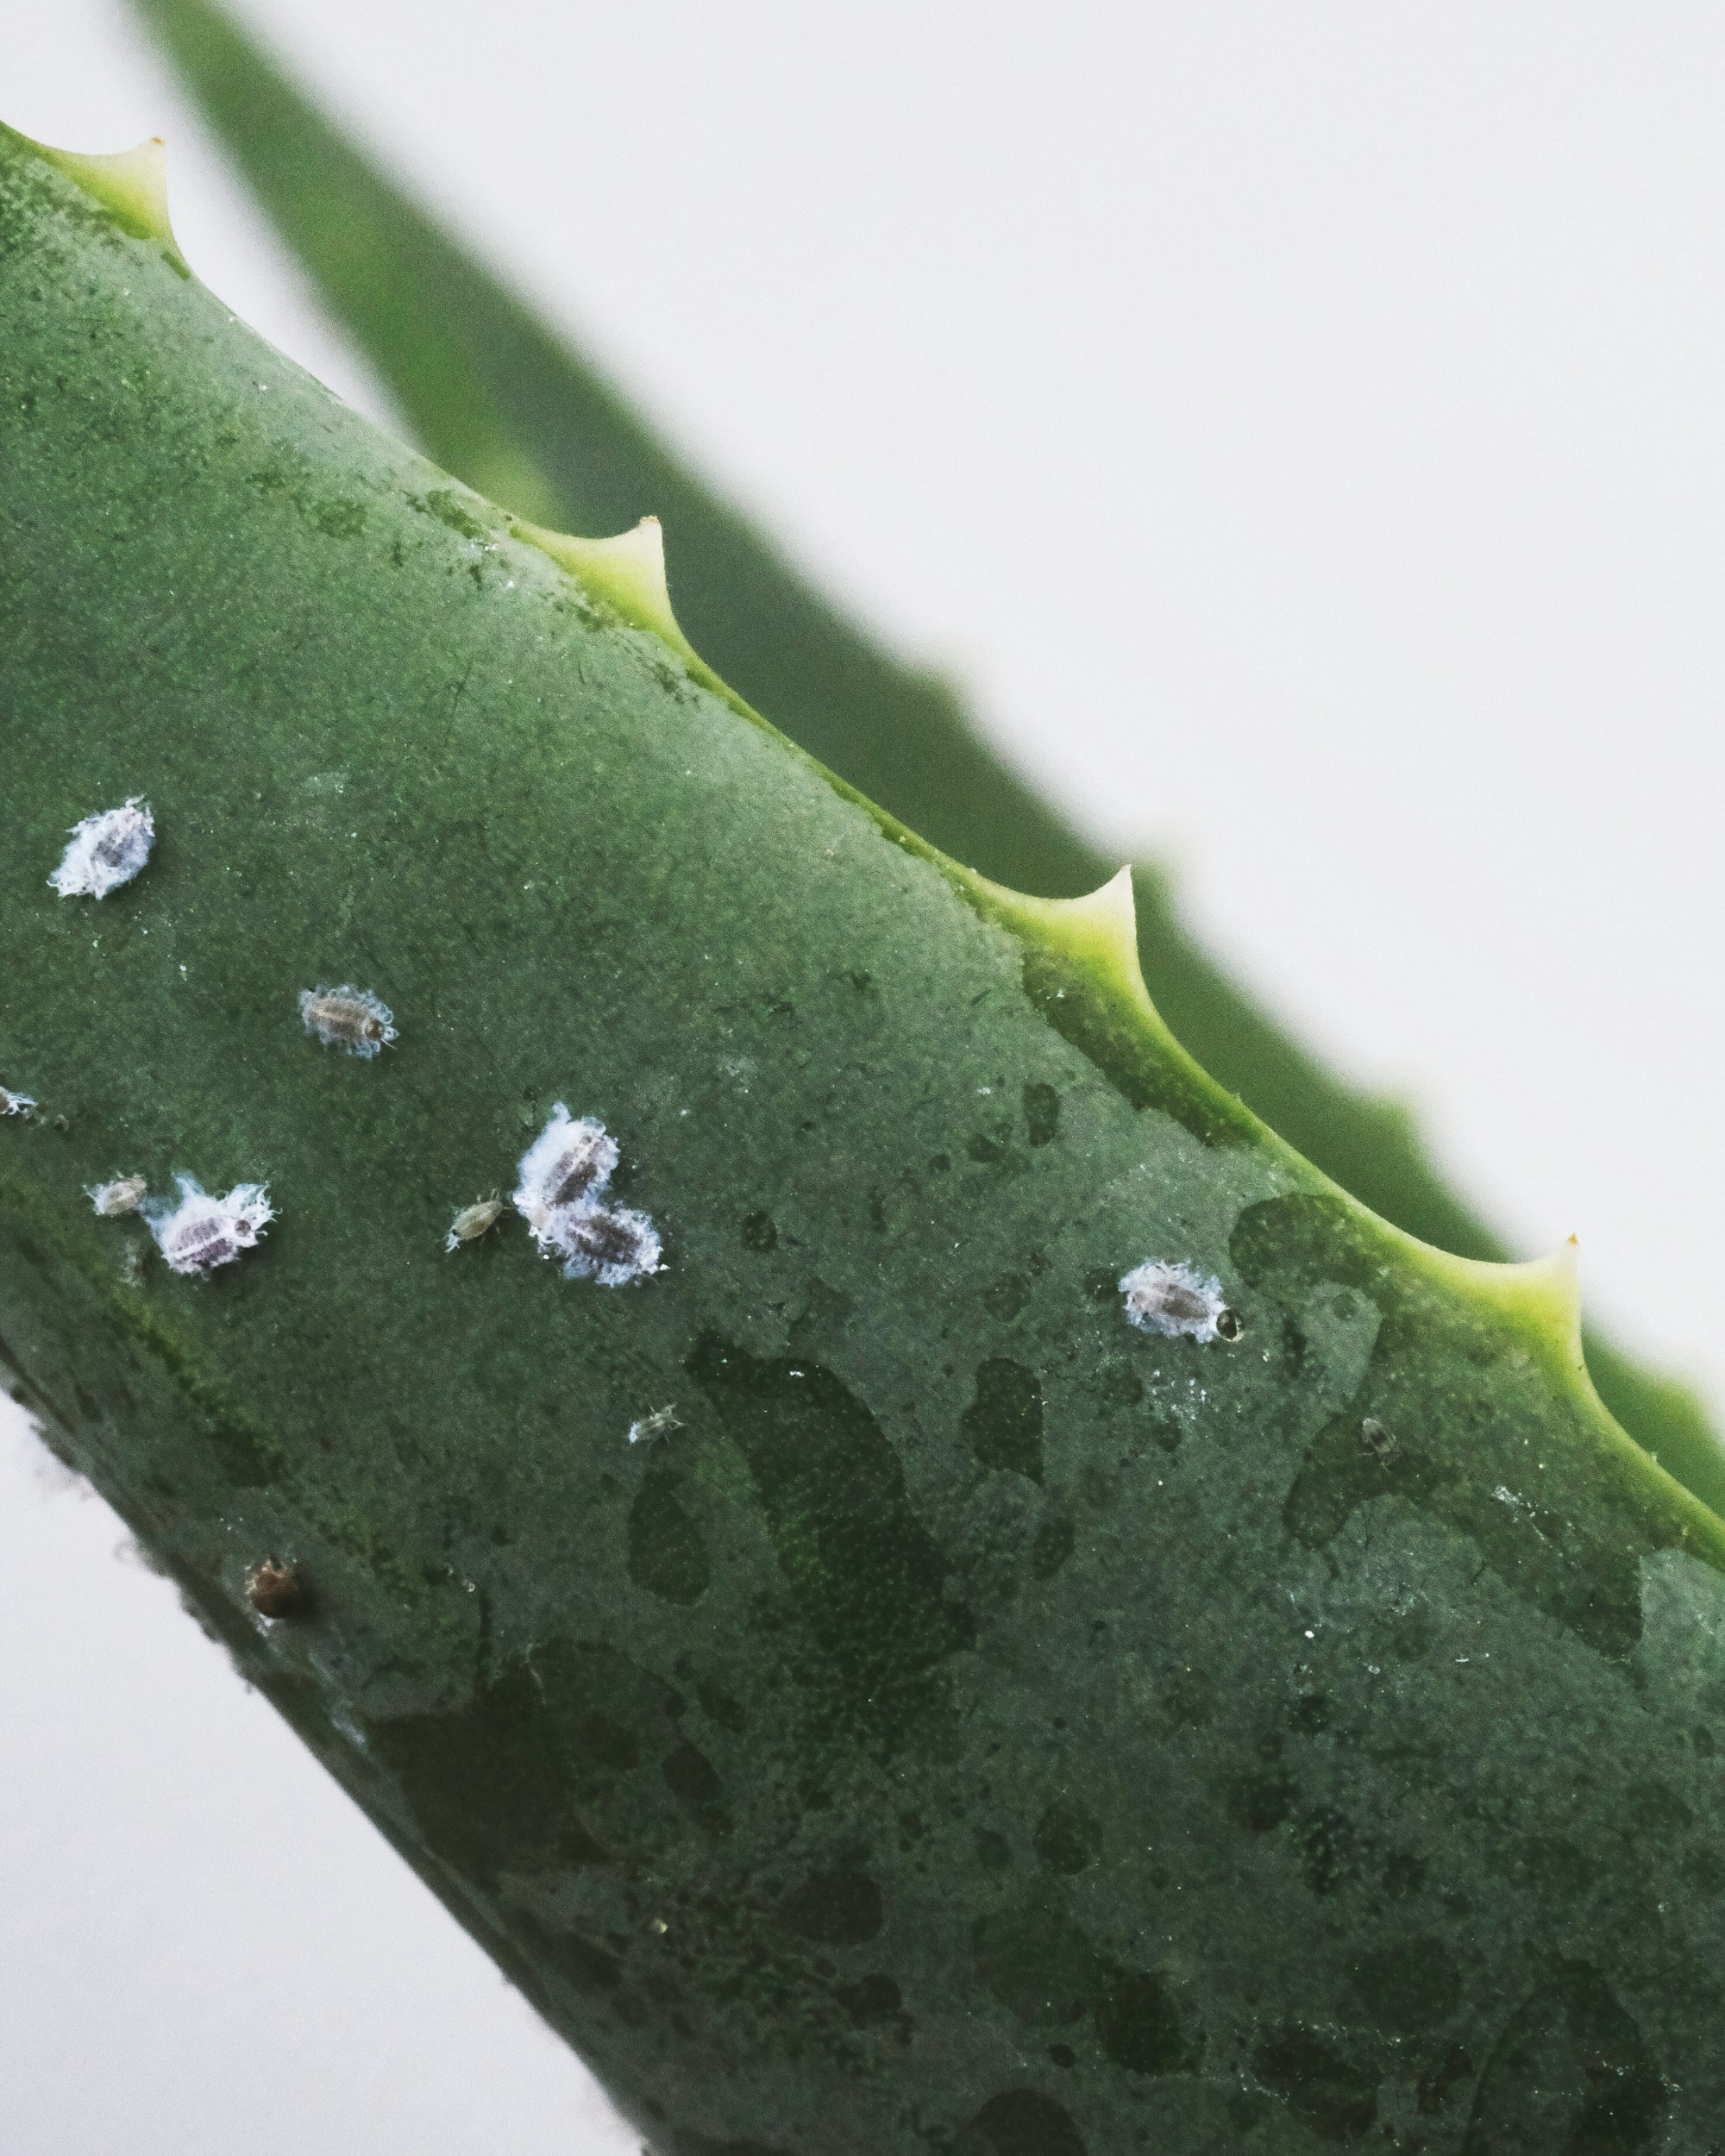 Mealy bugs on a aloe vera plant